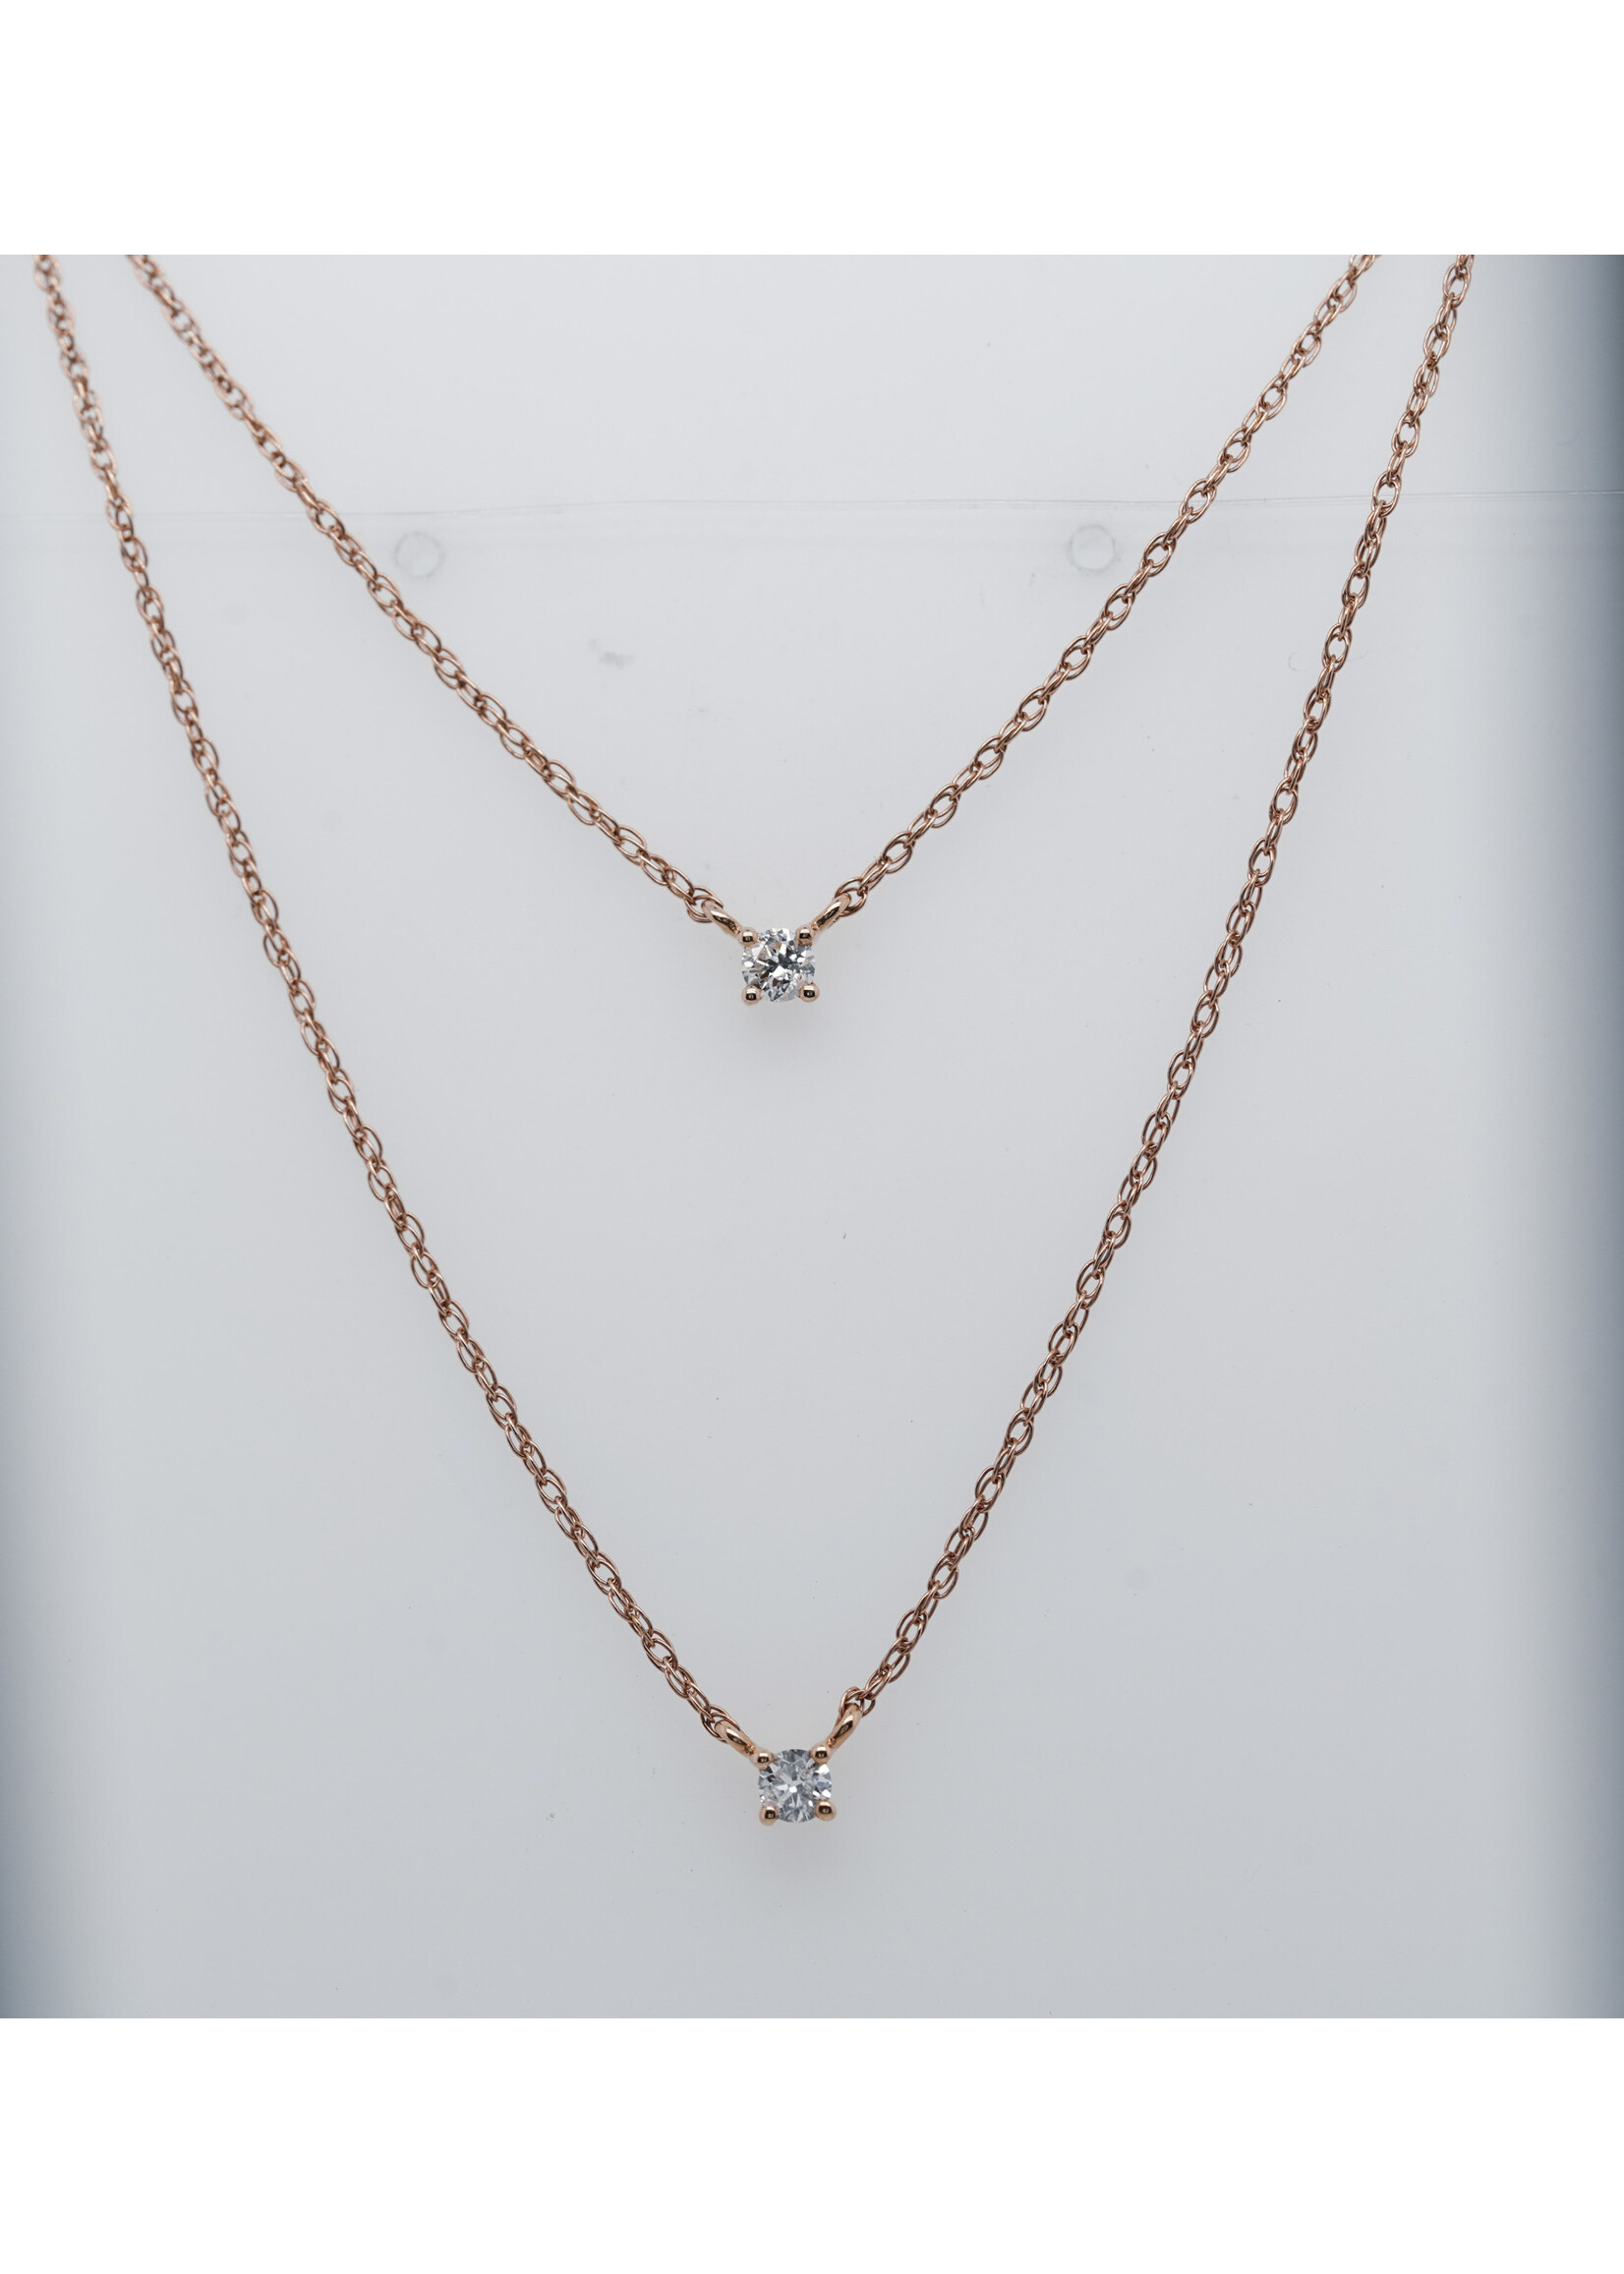 14KR 1.82g 1/8ctw Layered Diamond Necklace 18"